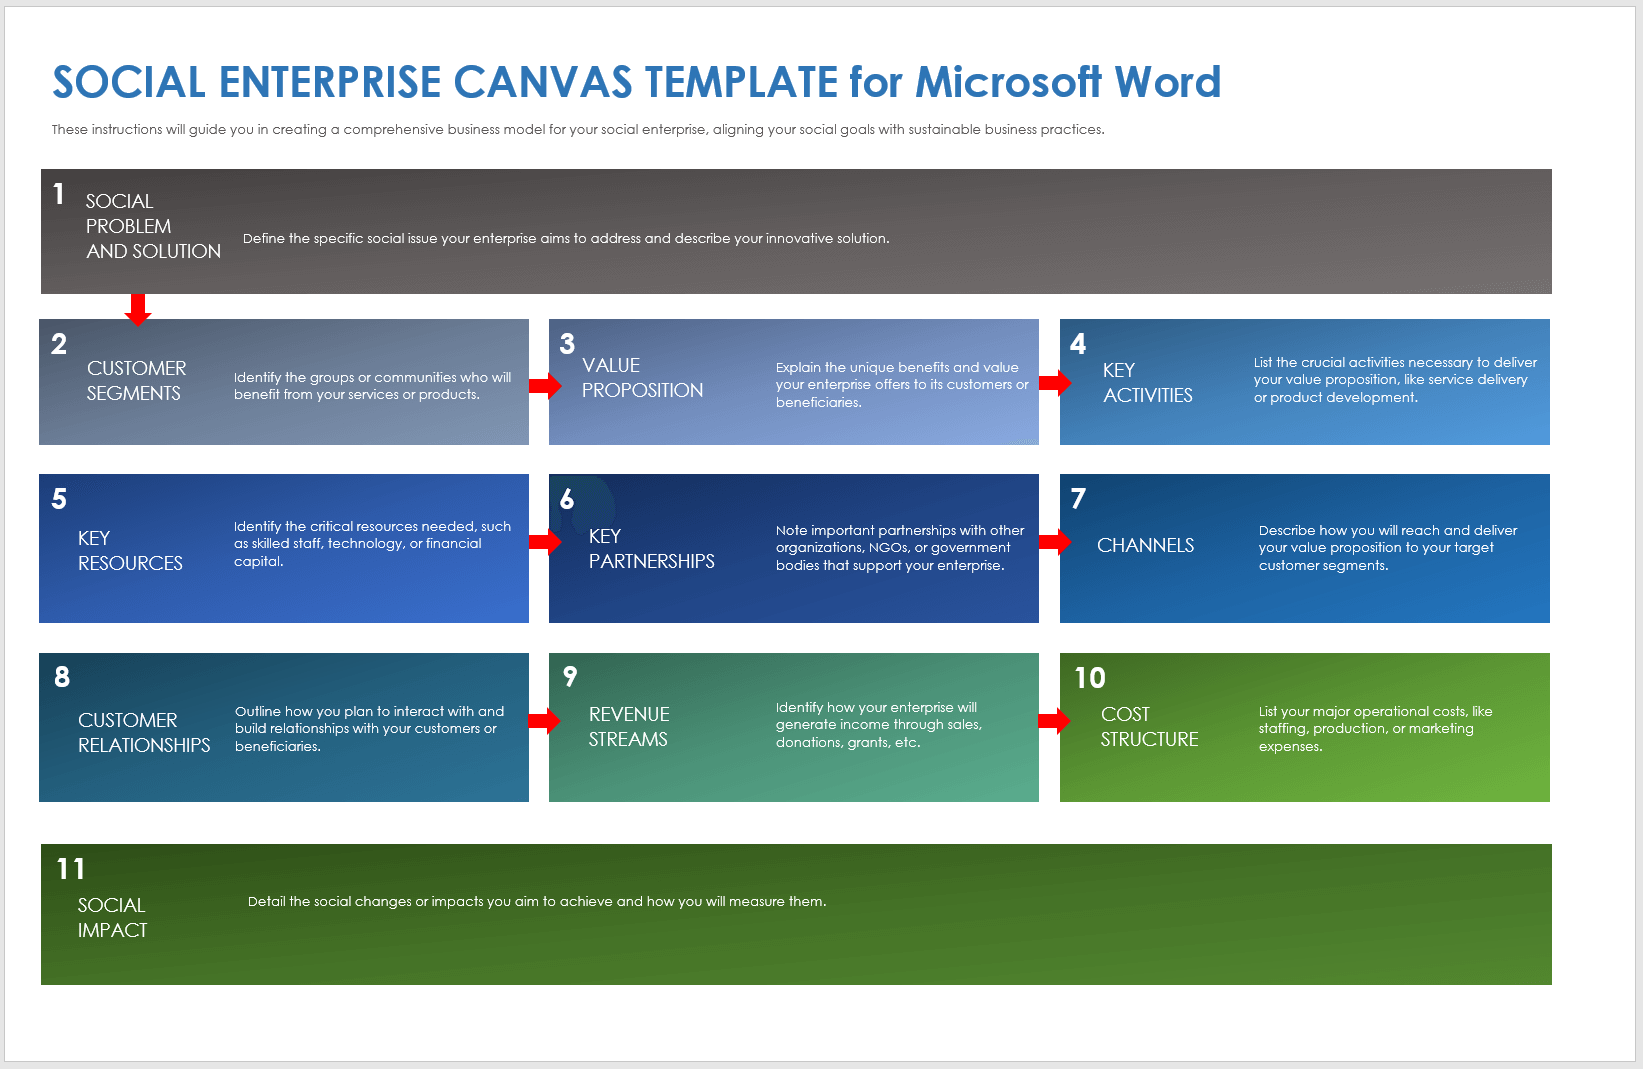 Social Enterprise Canvas Template for Microsoft Word